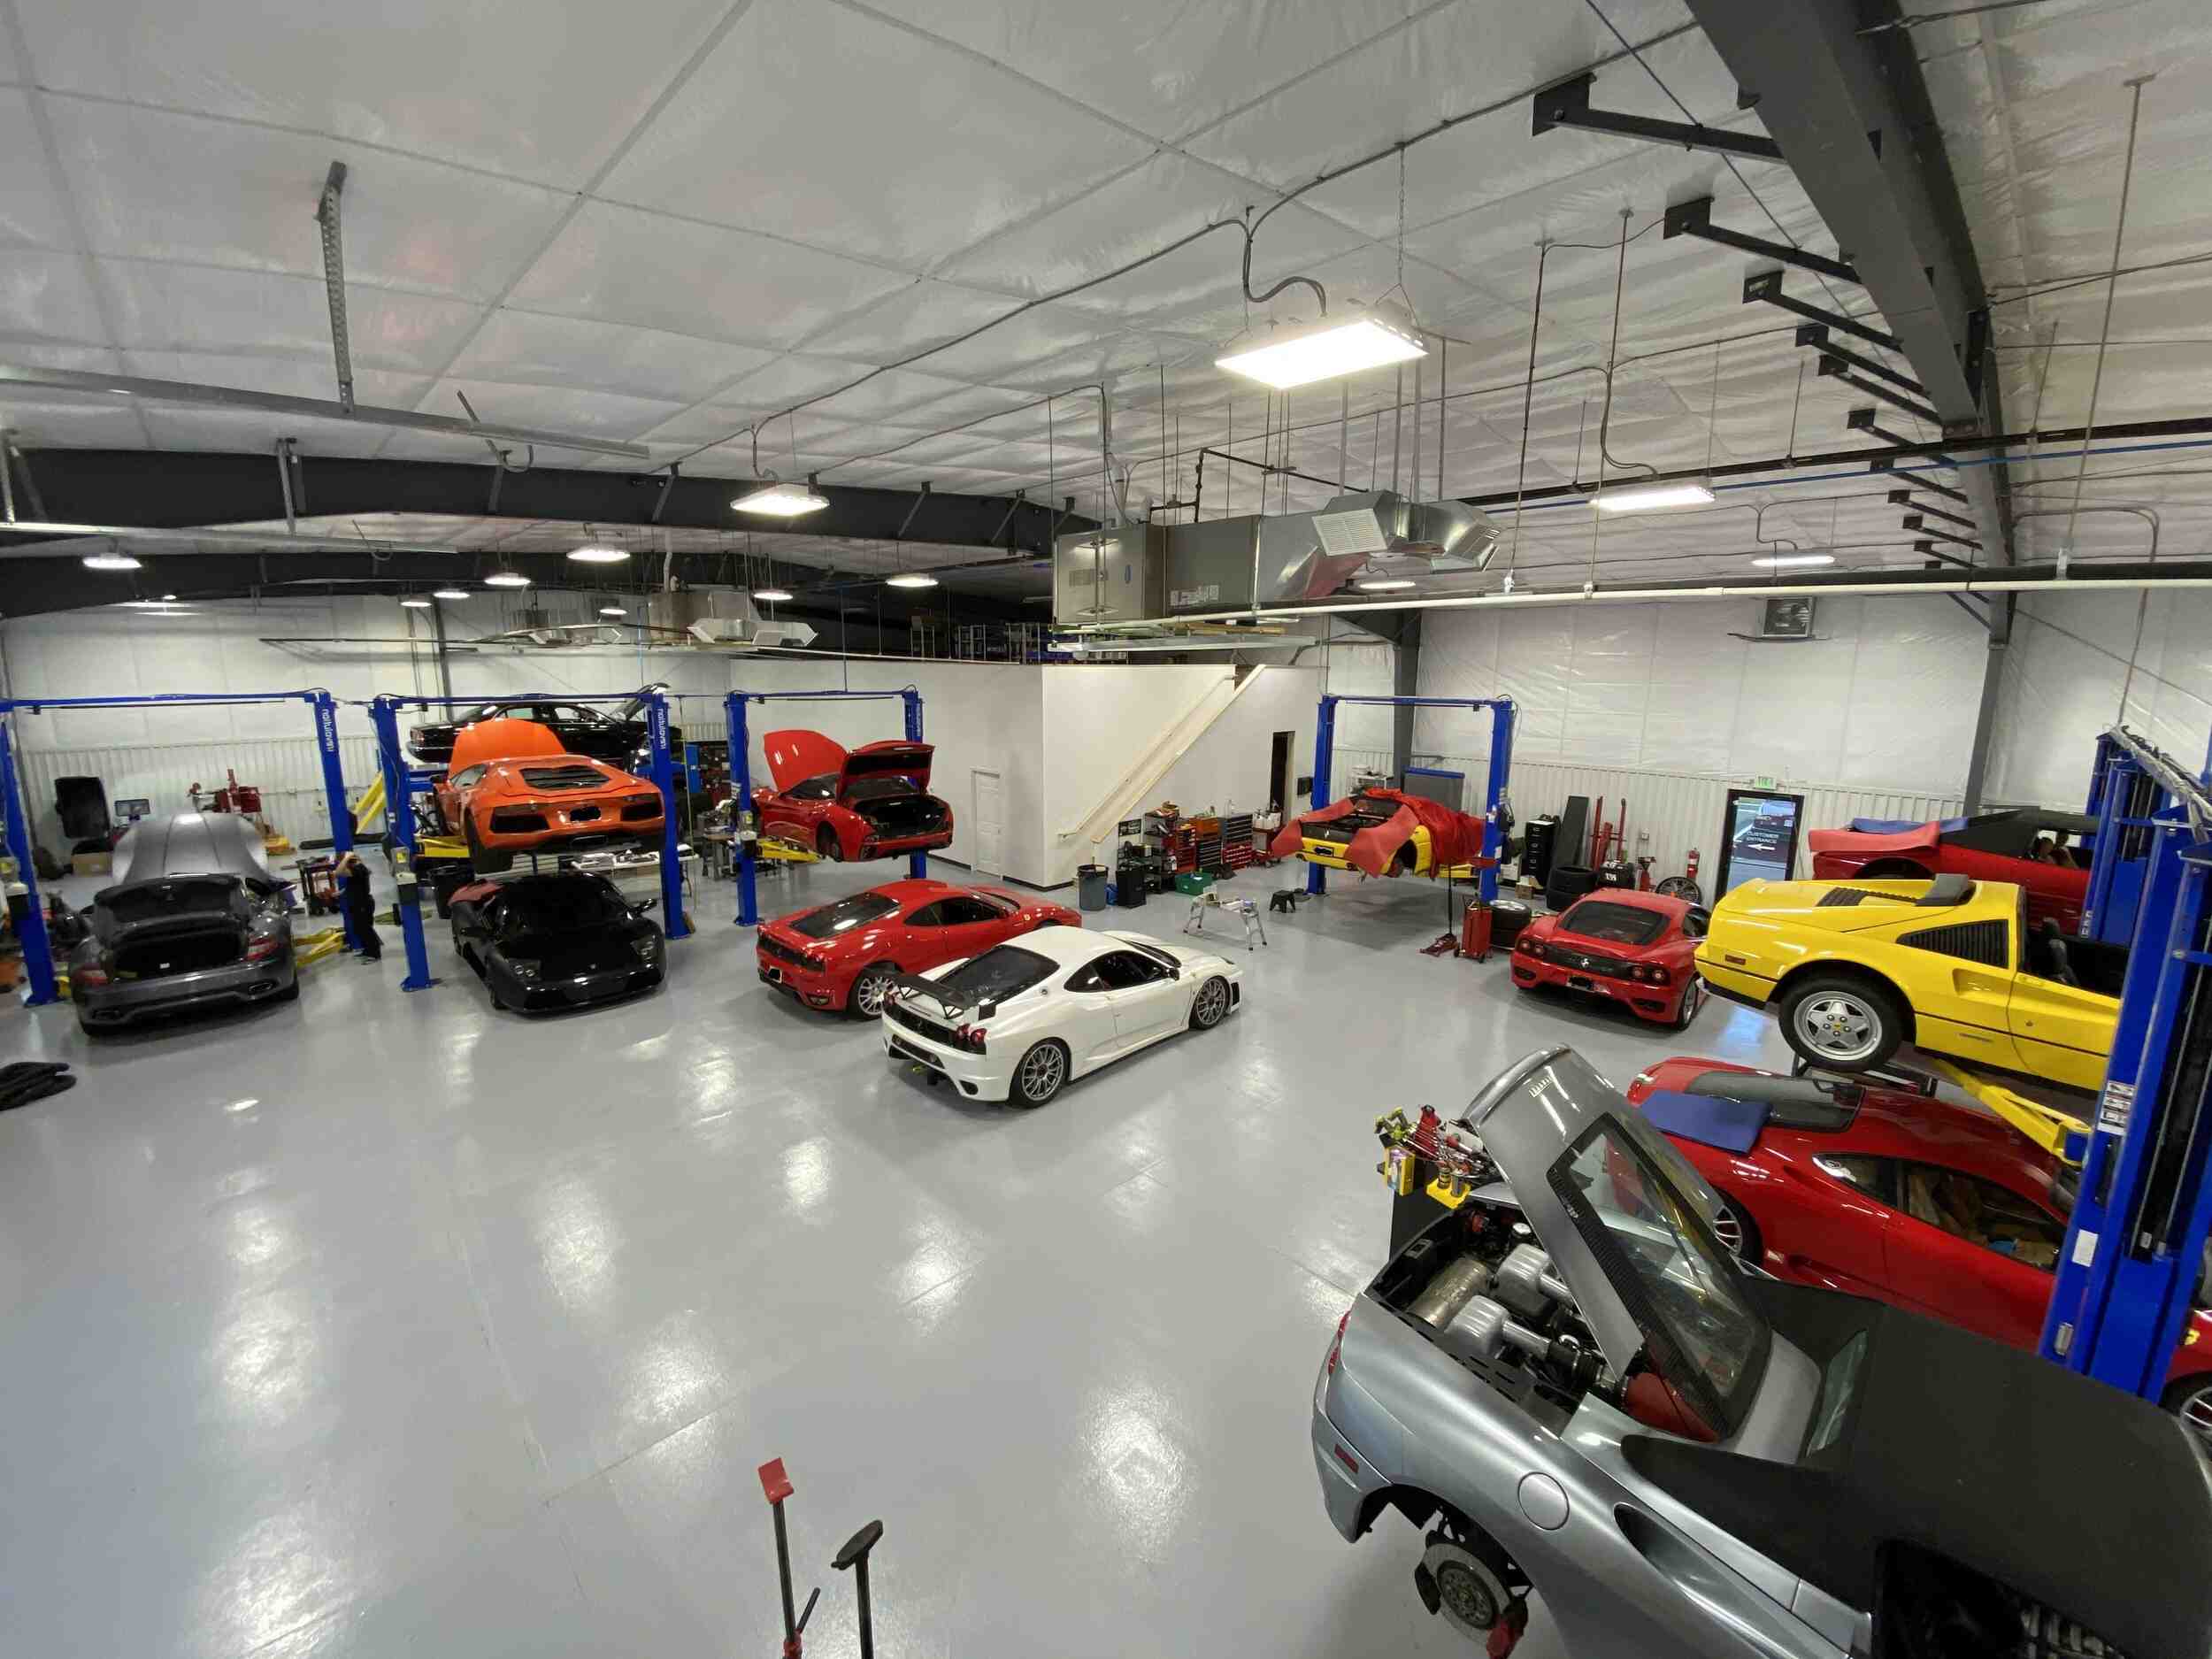 What do you call a open garage?